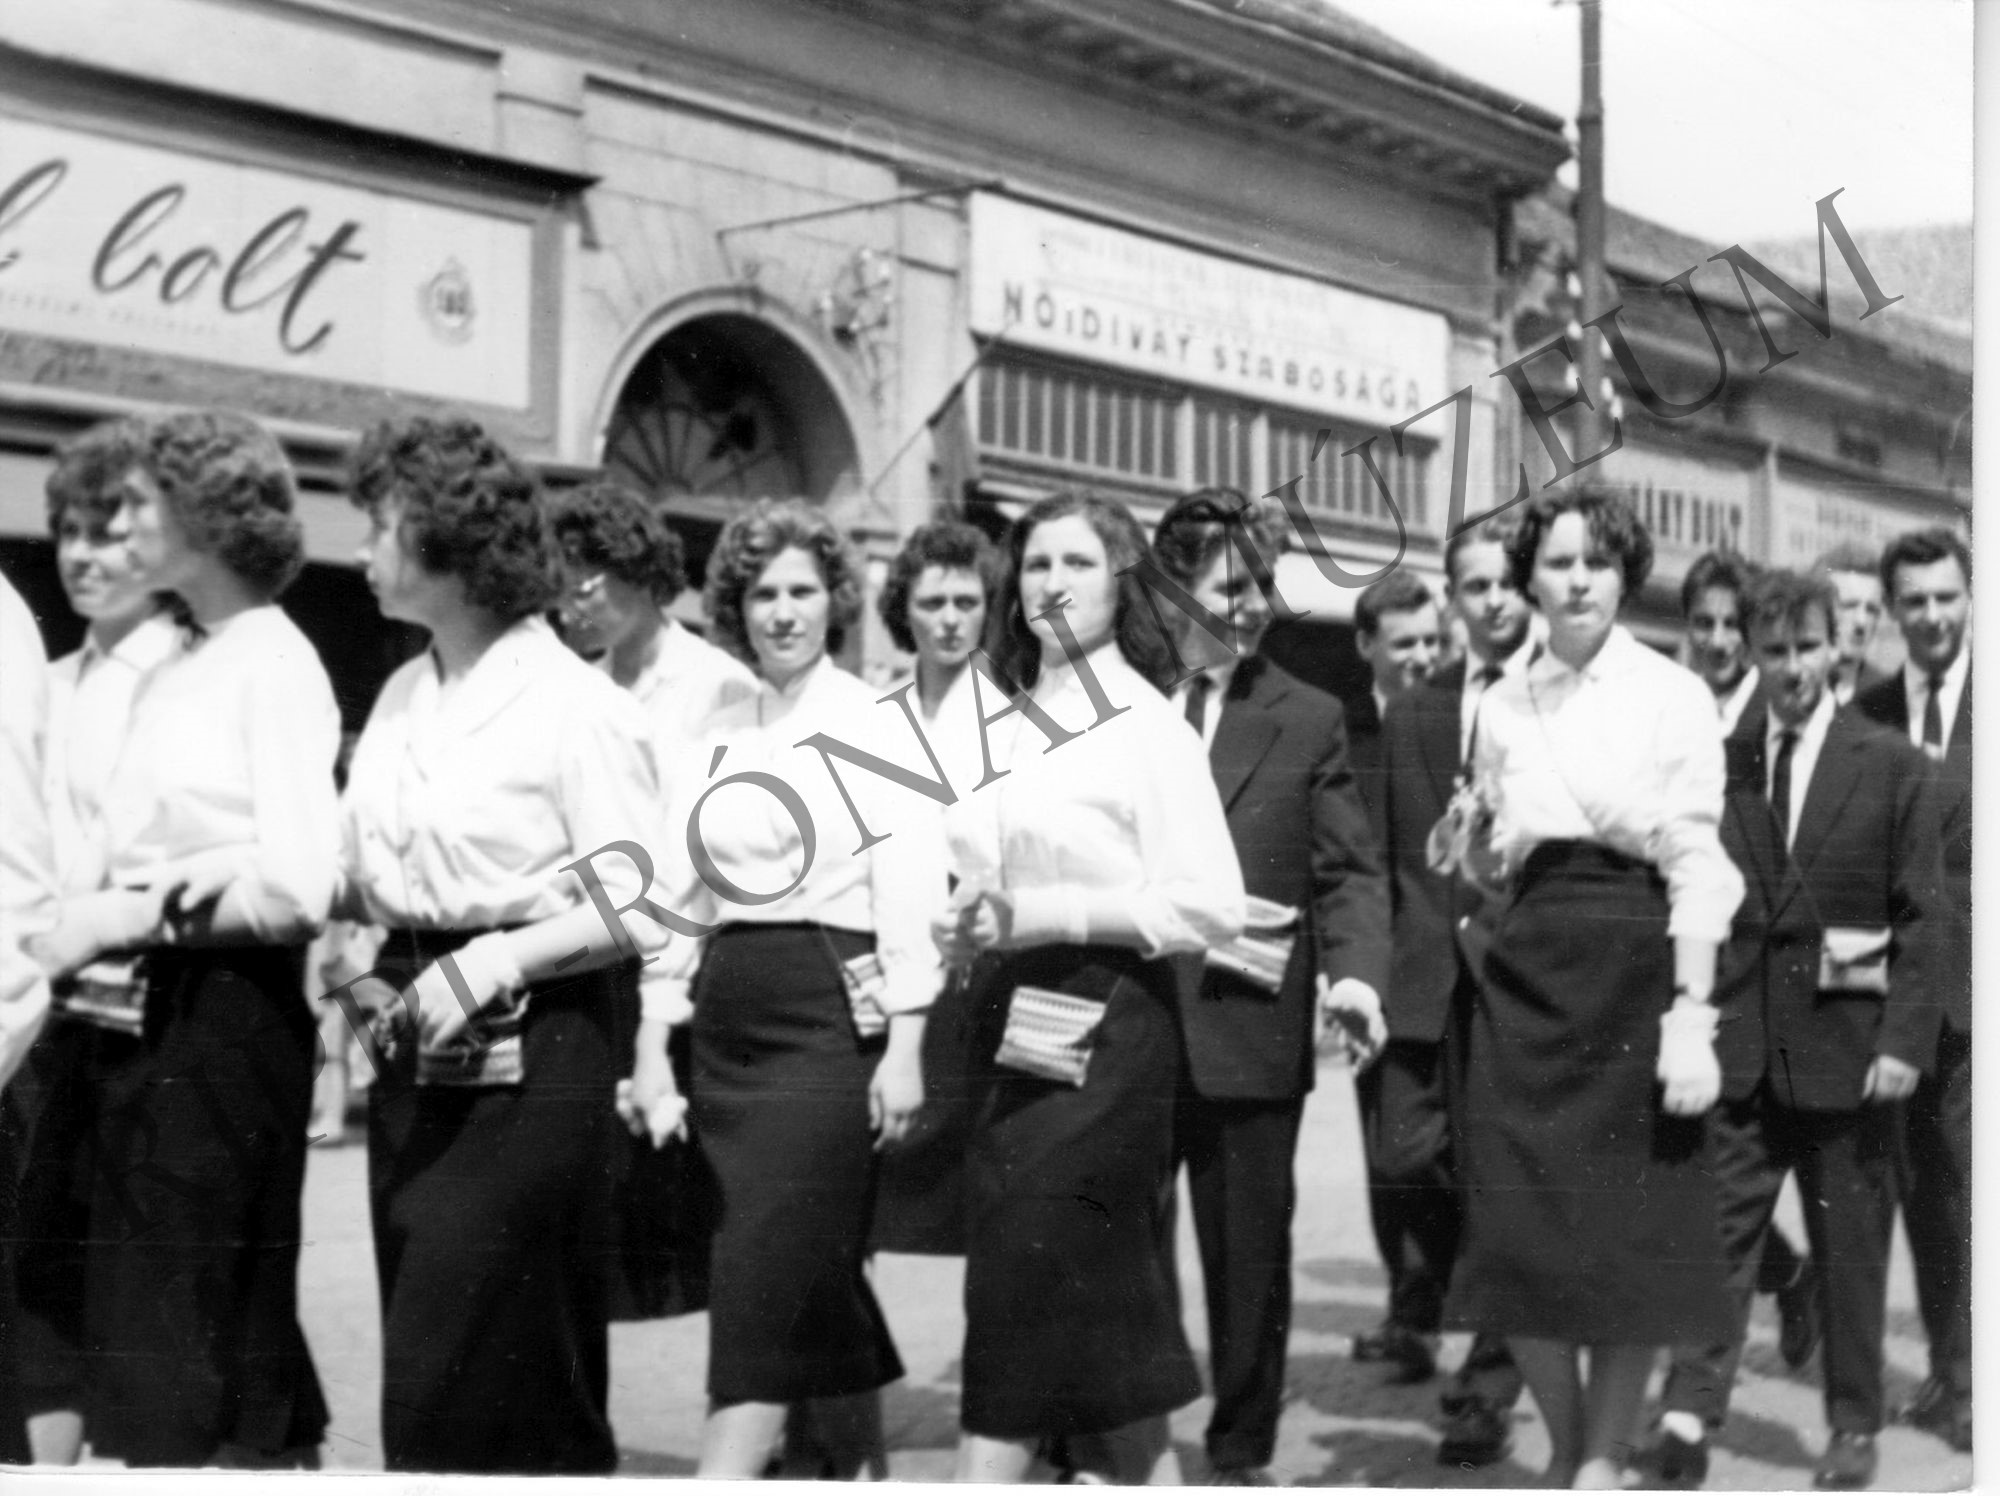 A Cukoripari Technikum diákjai vonulnak vissza az iskolába (Rippl-Rónai Múzeum CC BY-NC-SA)